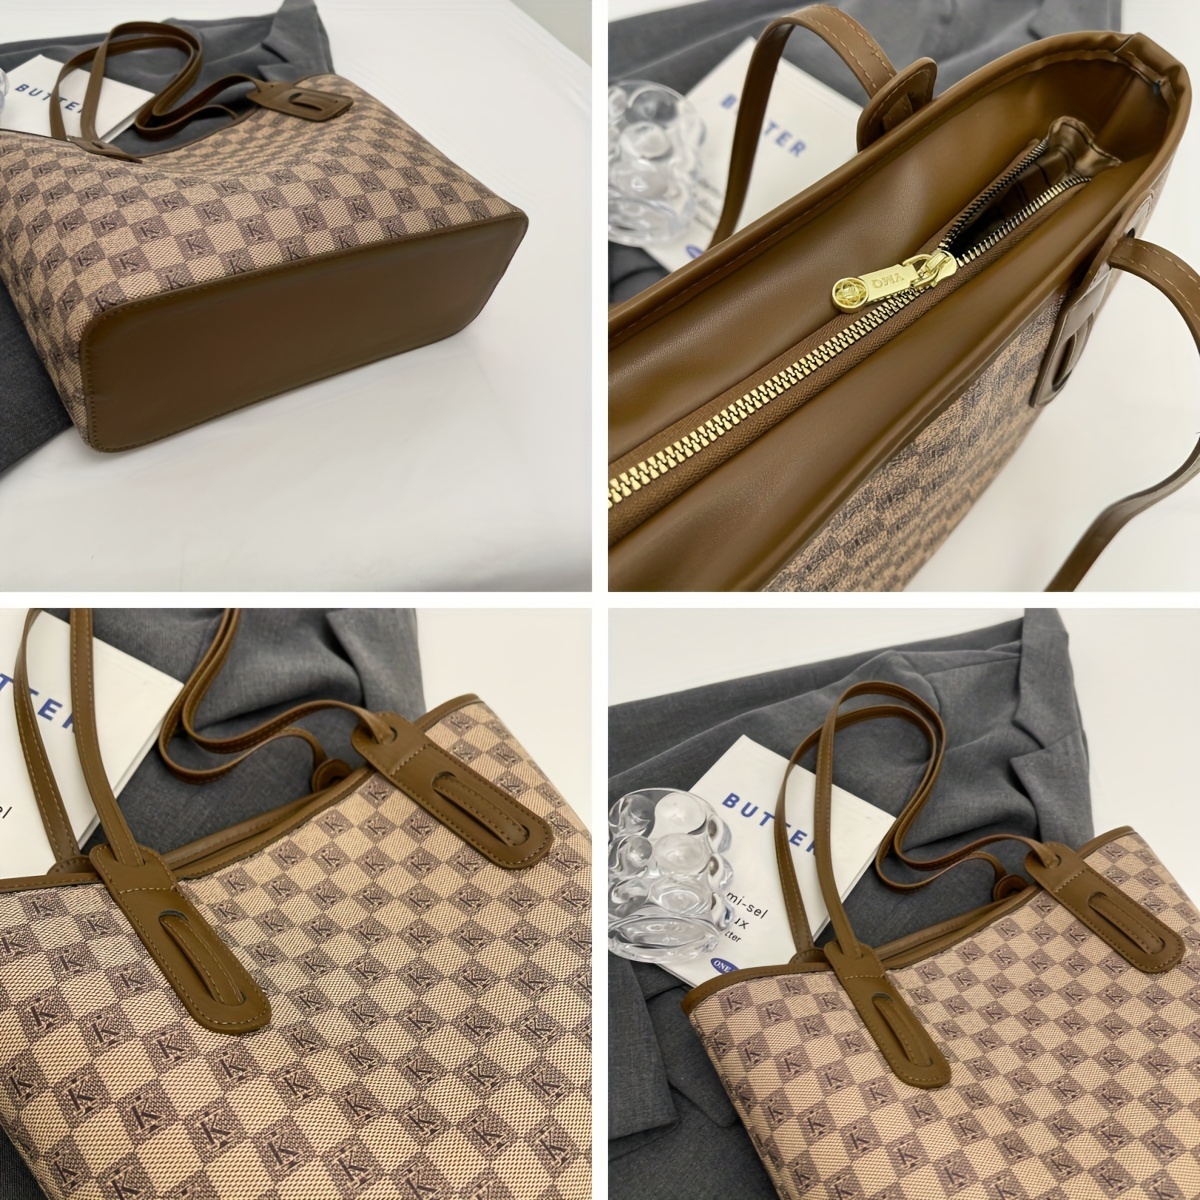 Retro Checkered Plaid Tote Bag, Luxury PU Leather Handbag, Large Capacity  Shoulder Bag For Women